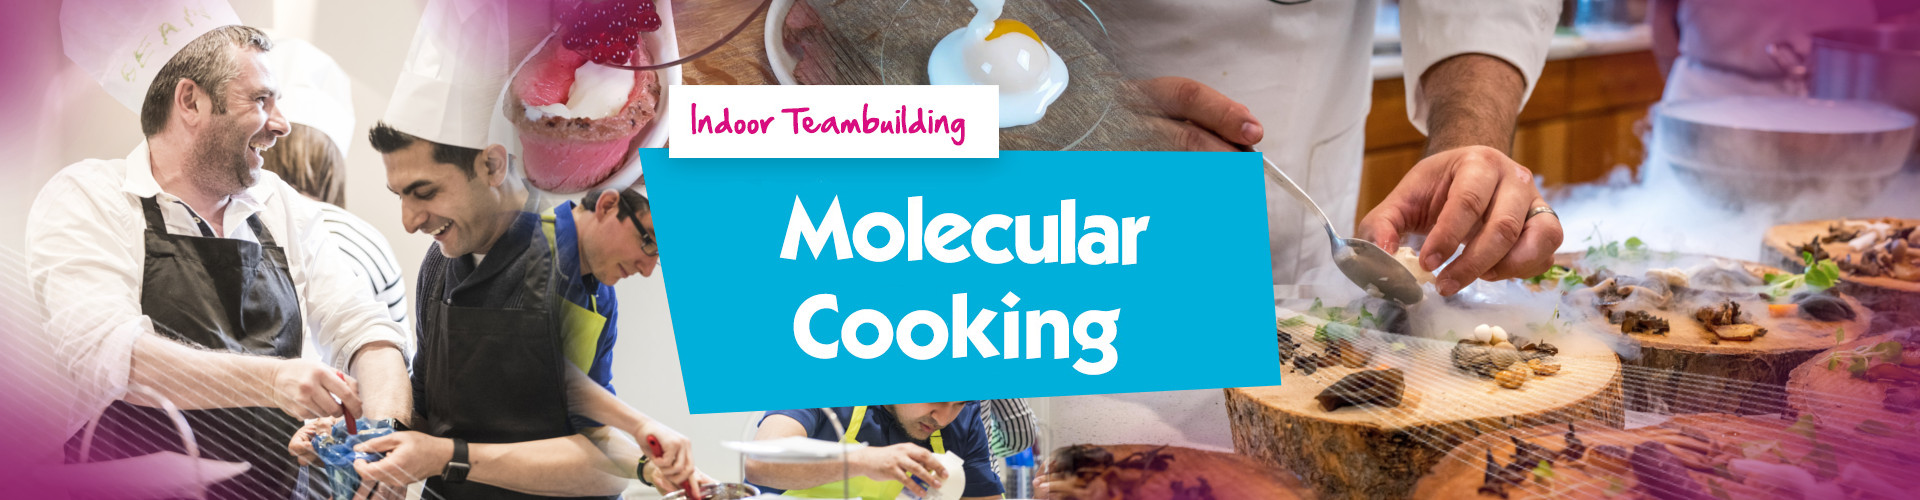 Molecular Cooking Banner